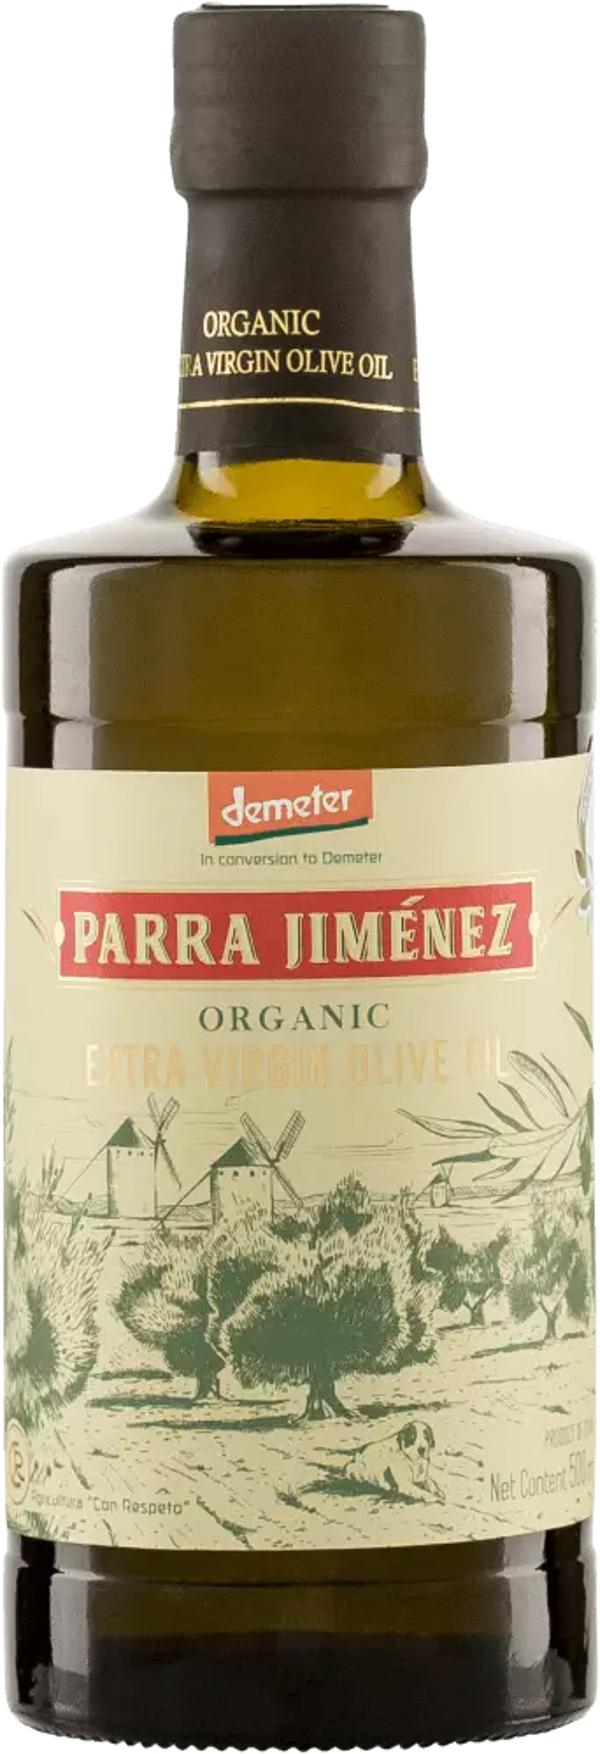 Produktfoto zu Aceite de Oliva Virgen Extra 0,5 l Familia Parra